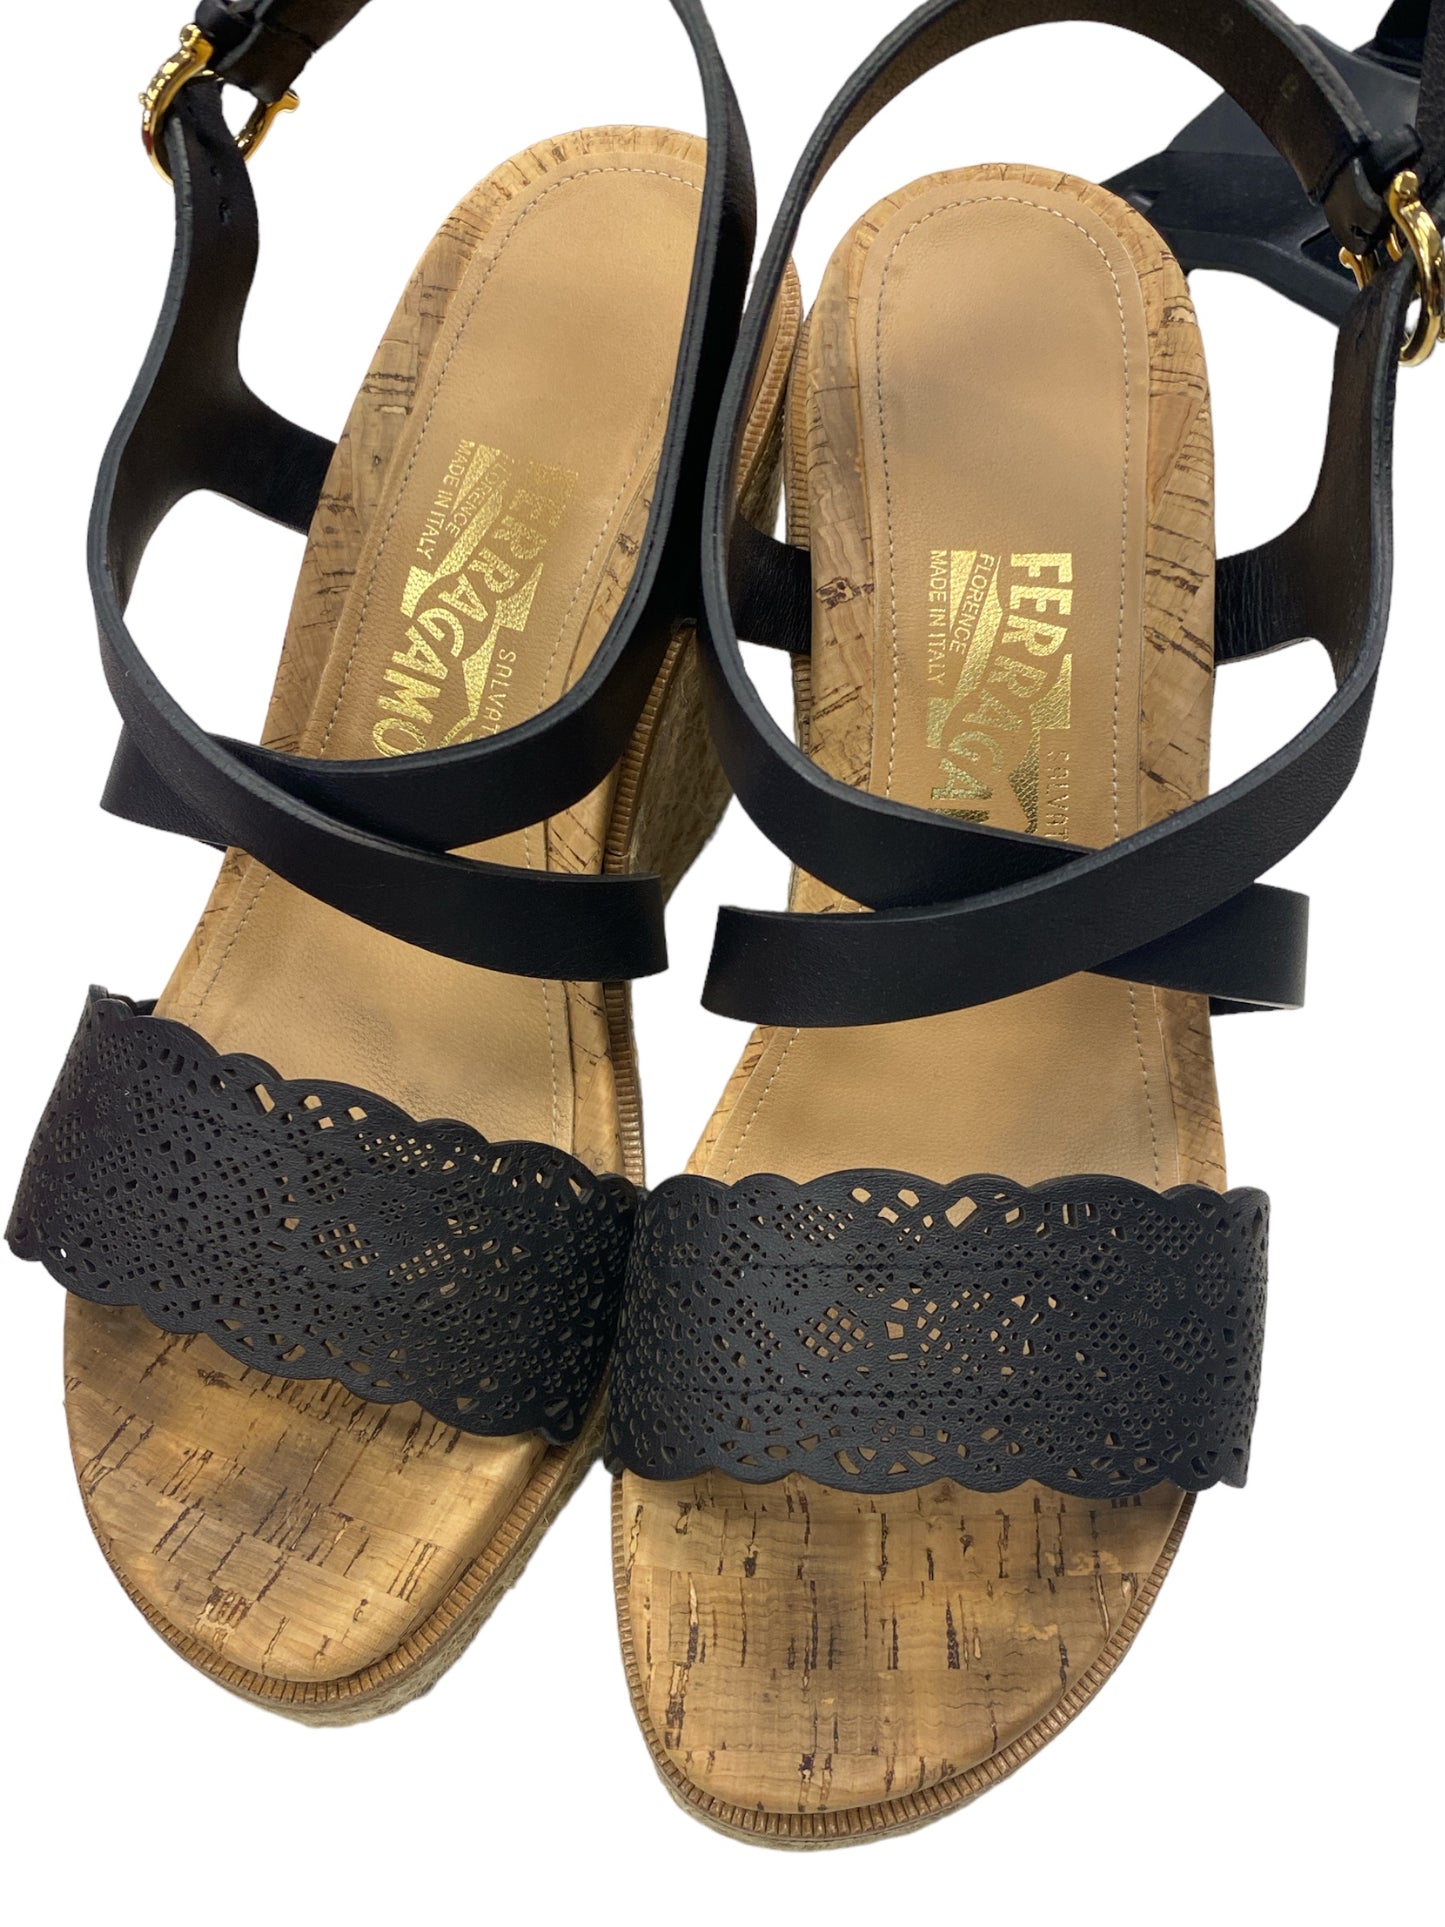 Sandals Heels Wedge By Salvatore Ferragamo  Size: 9